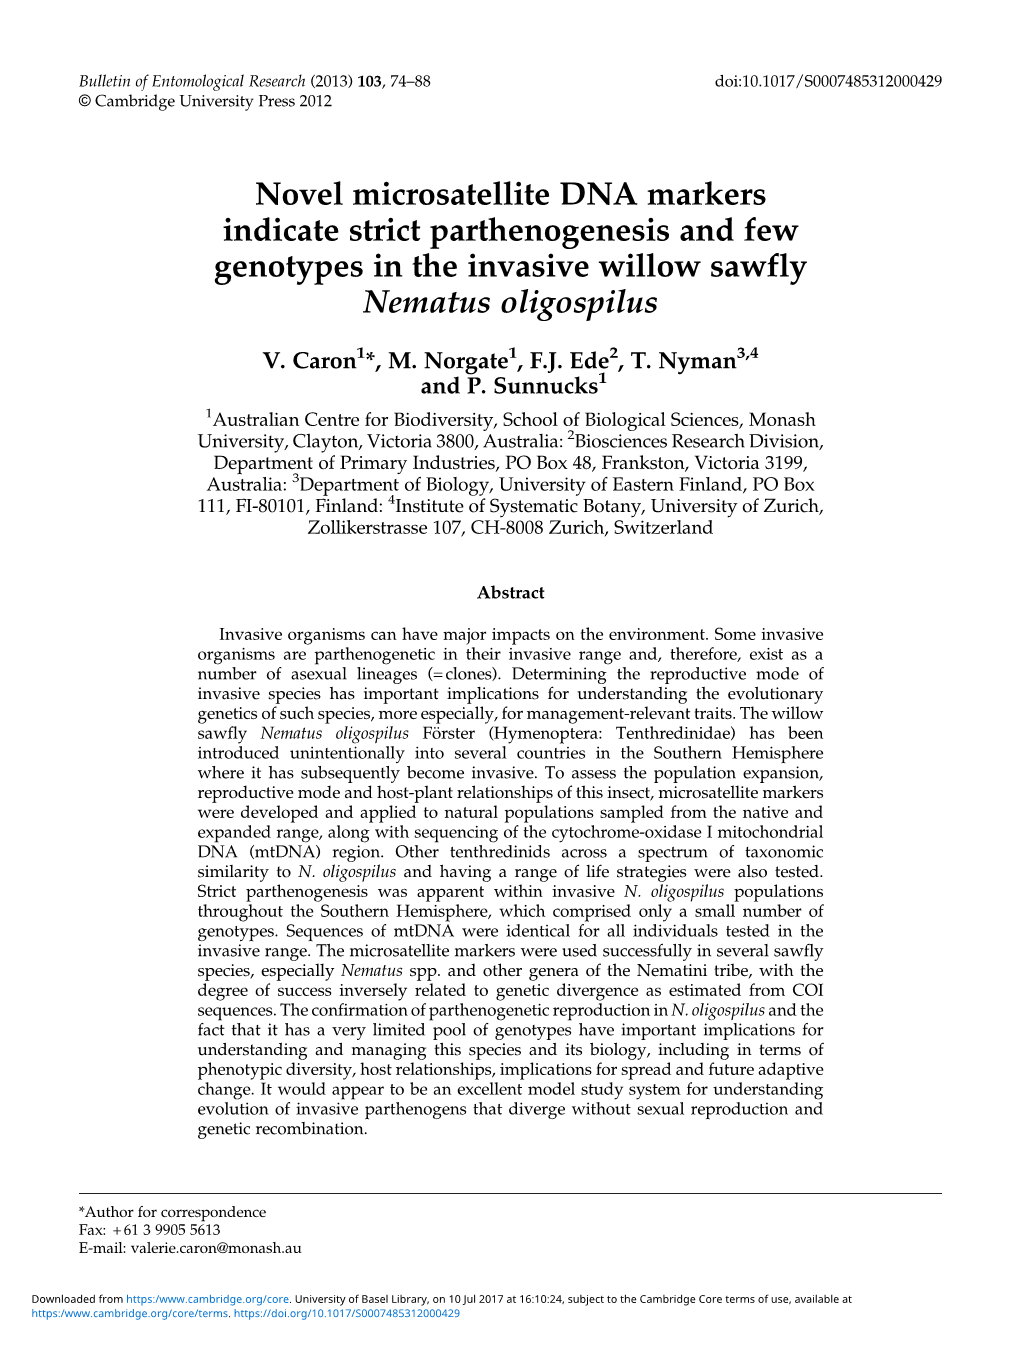 Novel Microsatellite DNA Markers Indicate Strict Parthenogenesis and Few Genotypes in the Invasive Willow Sawfly Nematus Oligospilus